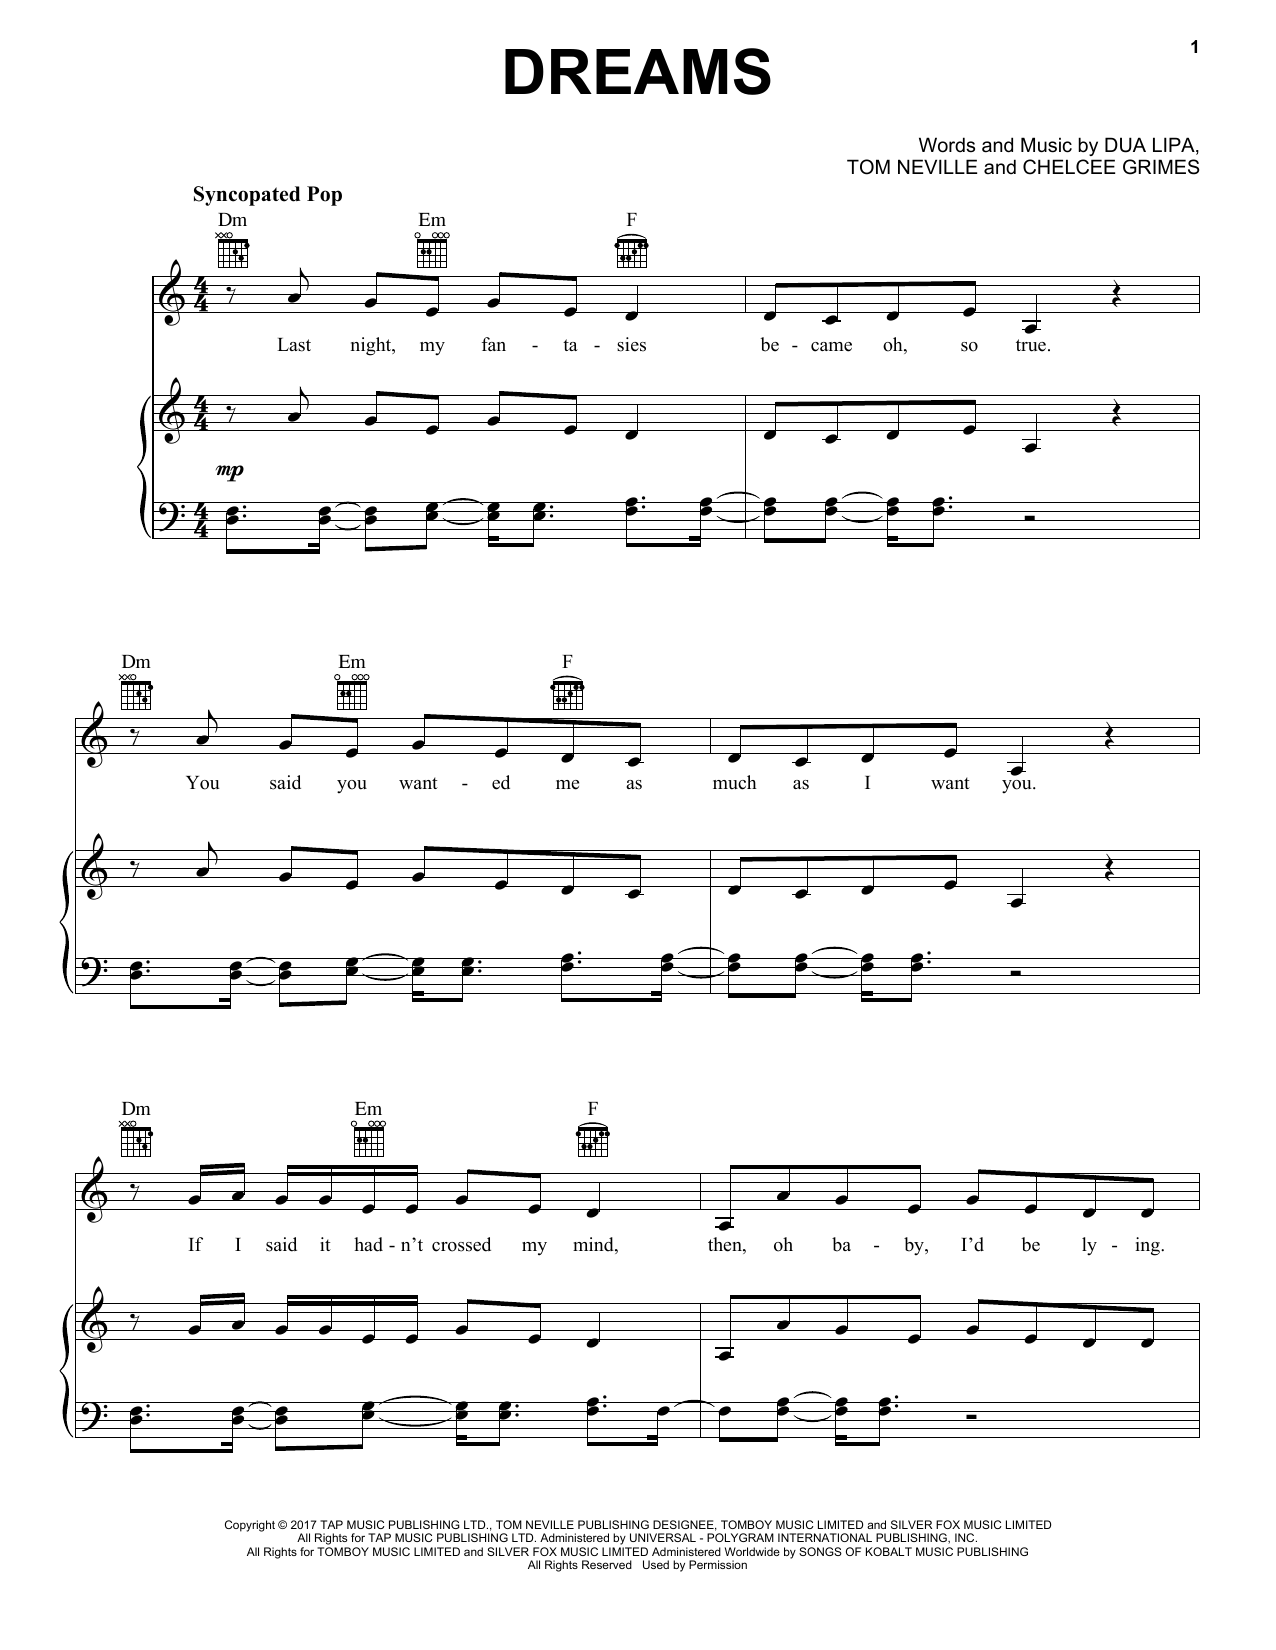 Dua Lipa Dreams Sheet Music Notes & Chords for Piano, Vocal & Guitar (Right-Hand Melody) - Download or Print PDF